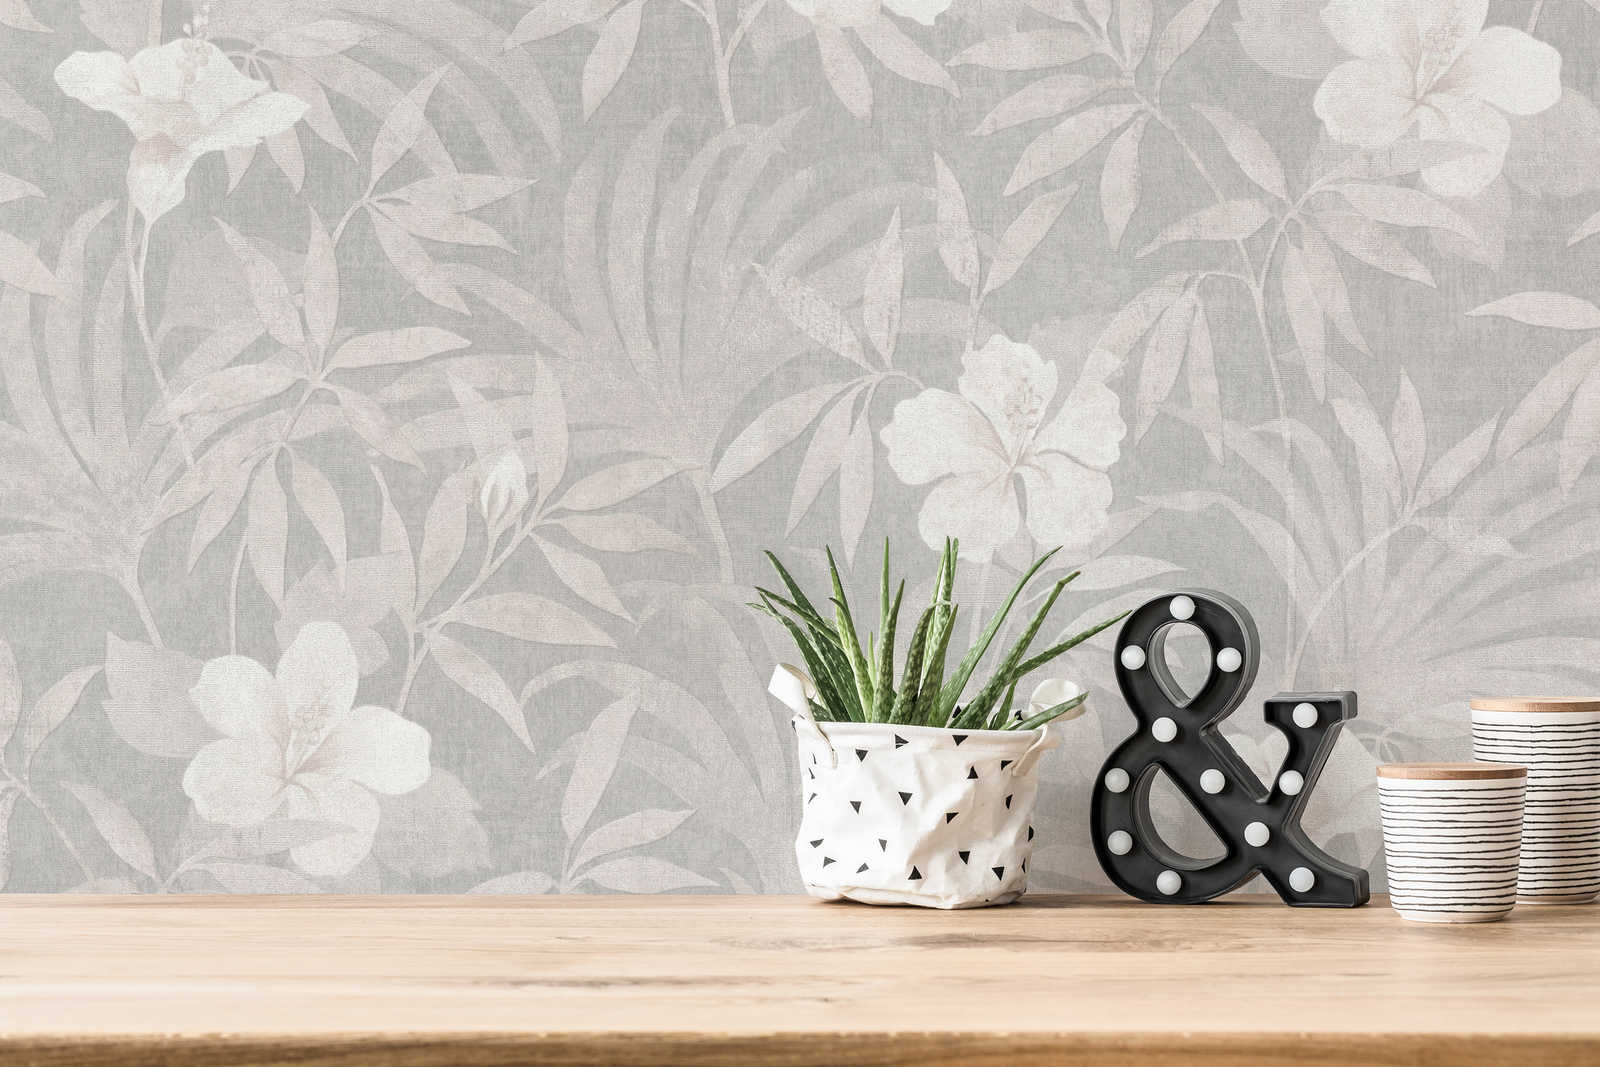             Linen optics wallpaper jungle leaves & flowers - beige, grey
        